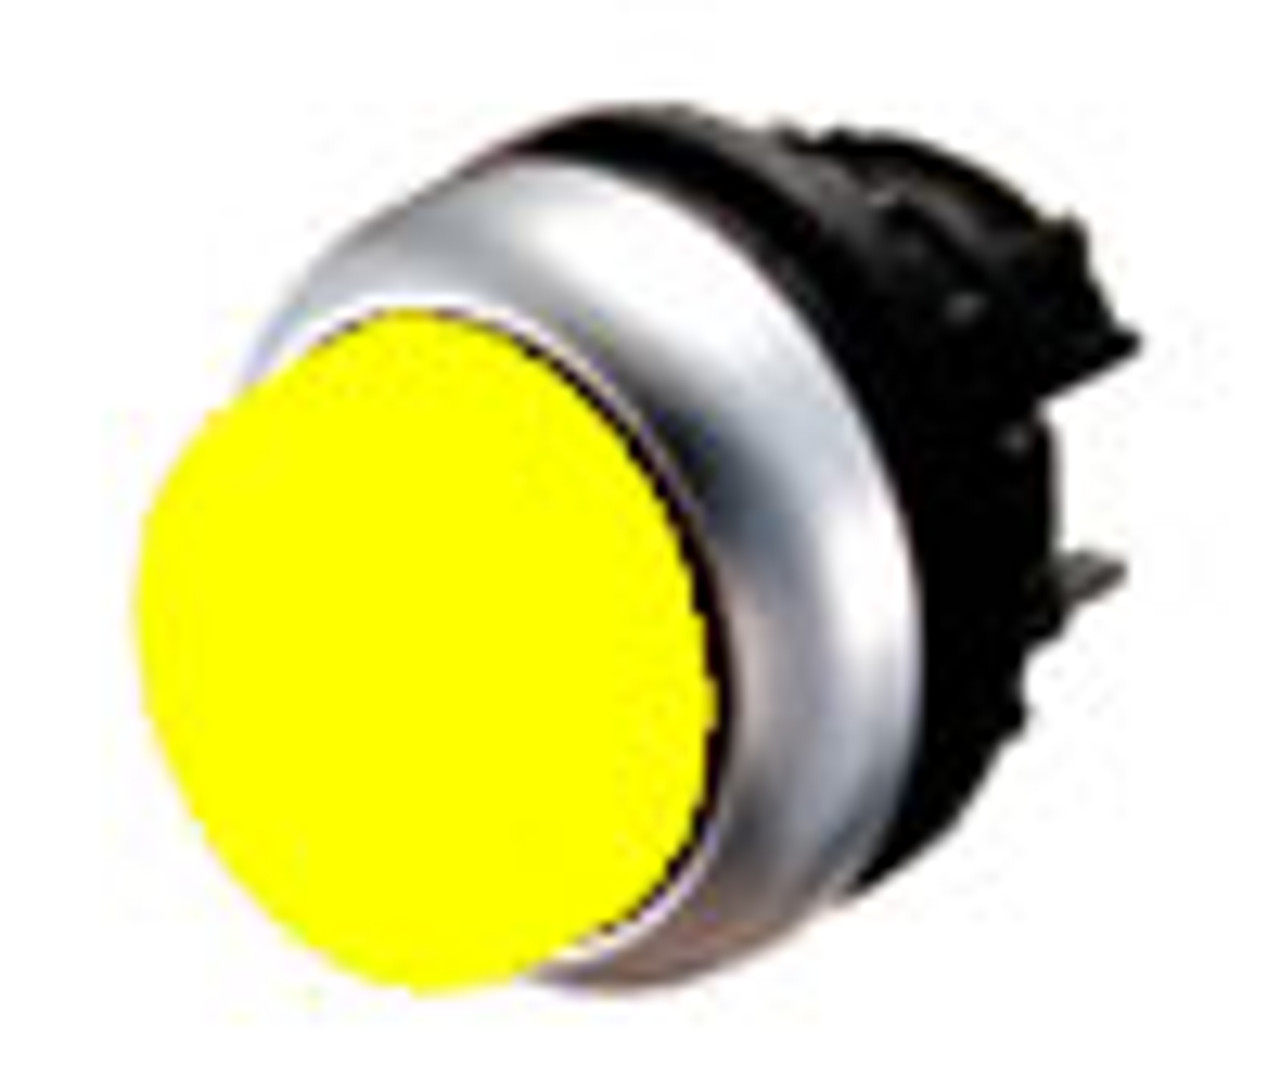 Moeller M22-DRH-Y yellow push button